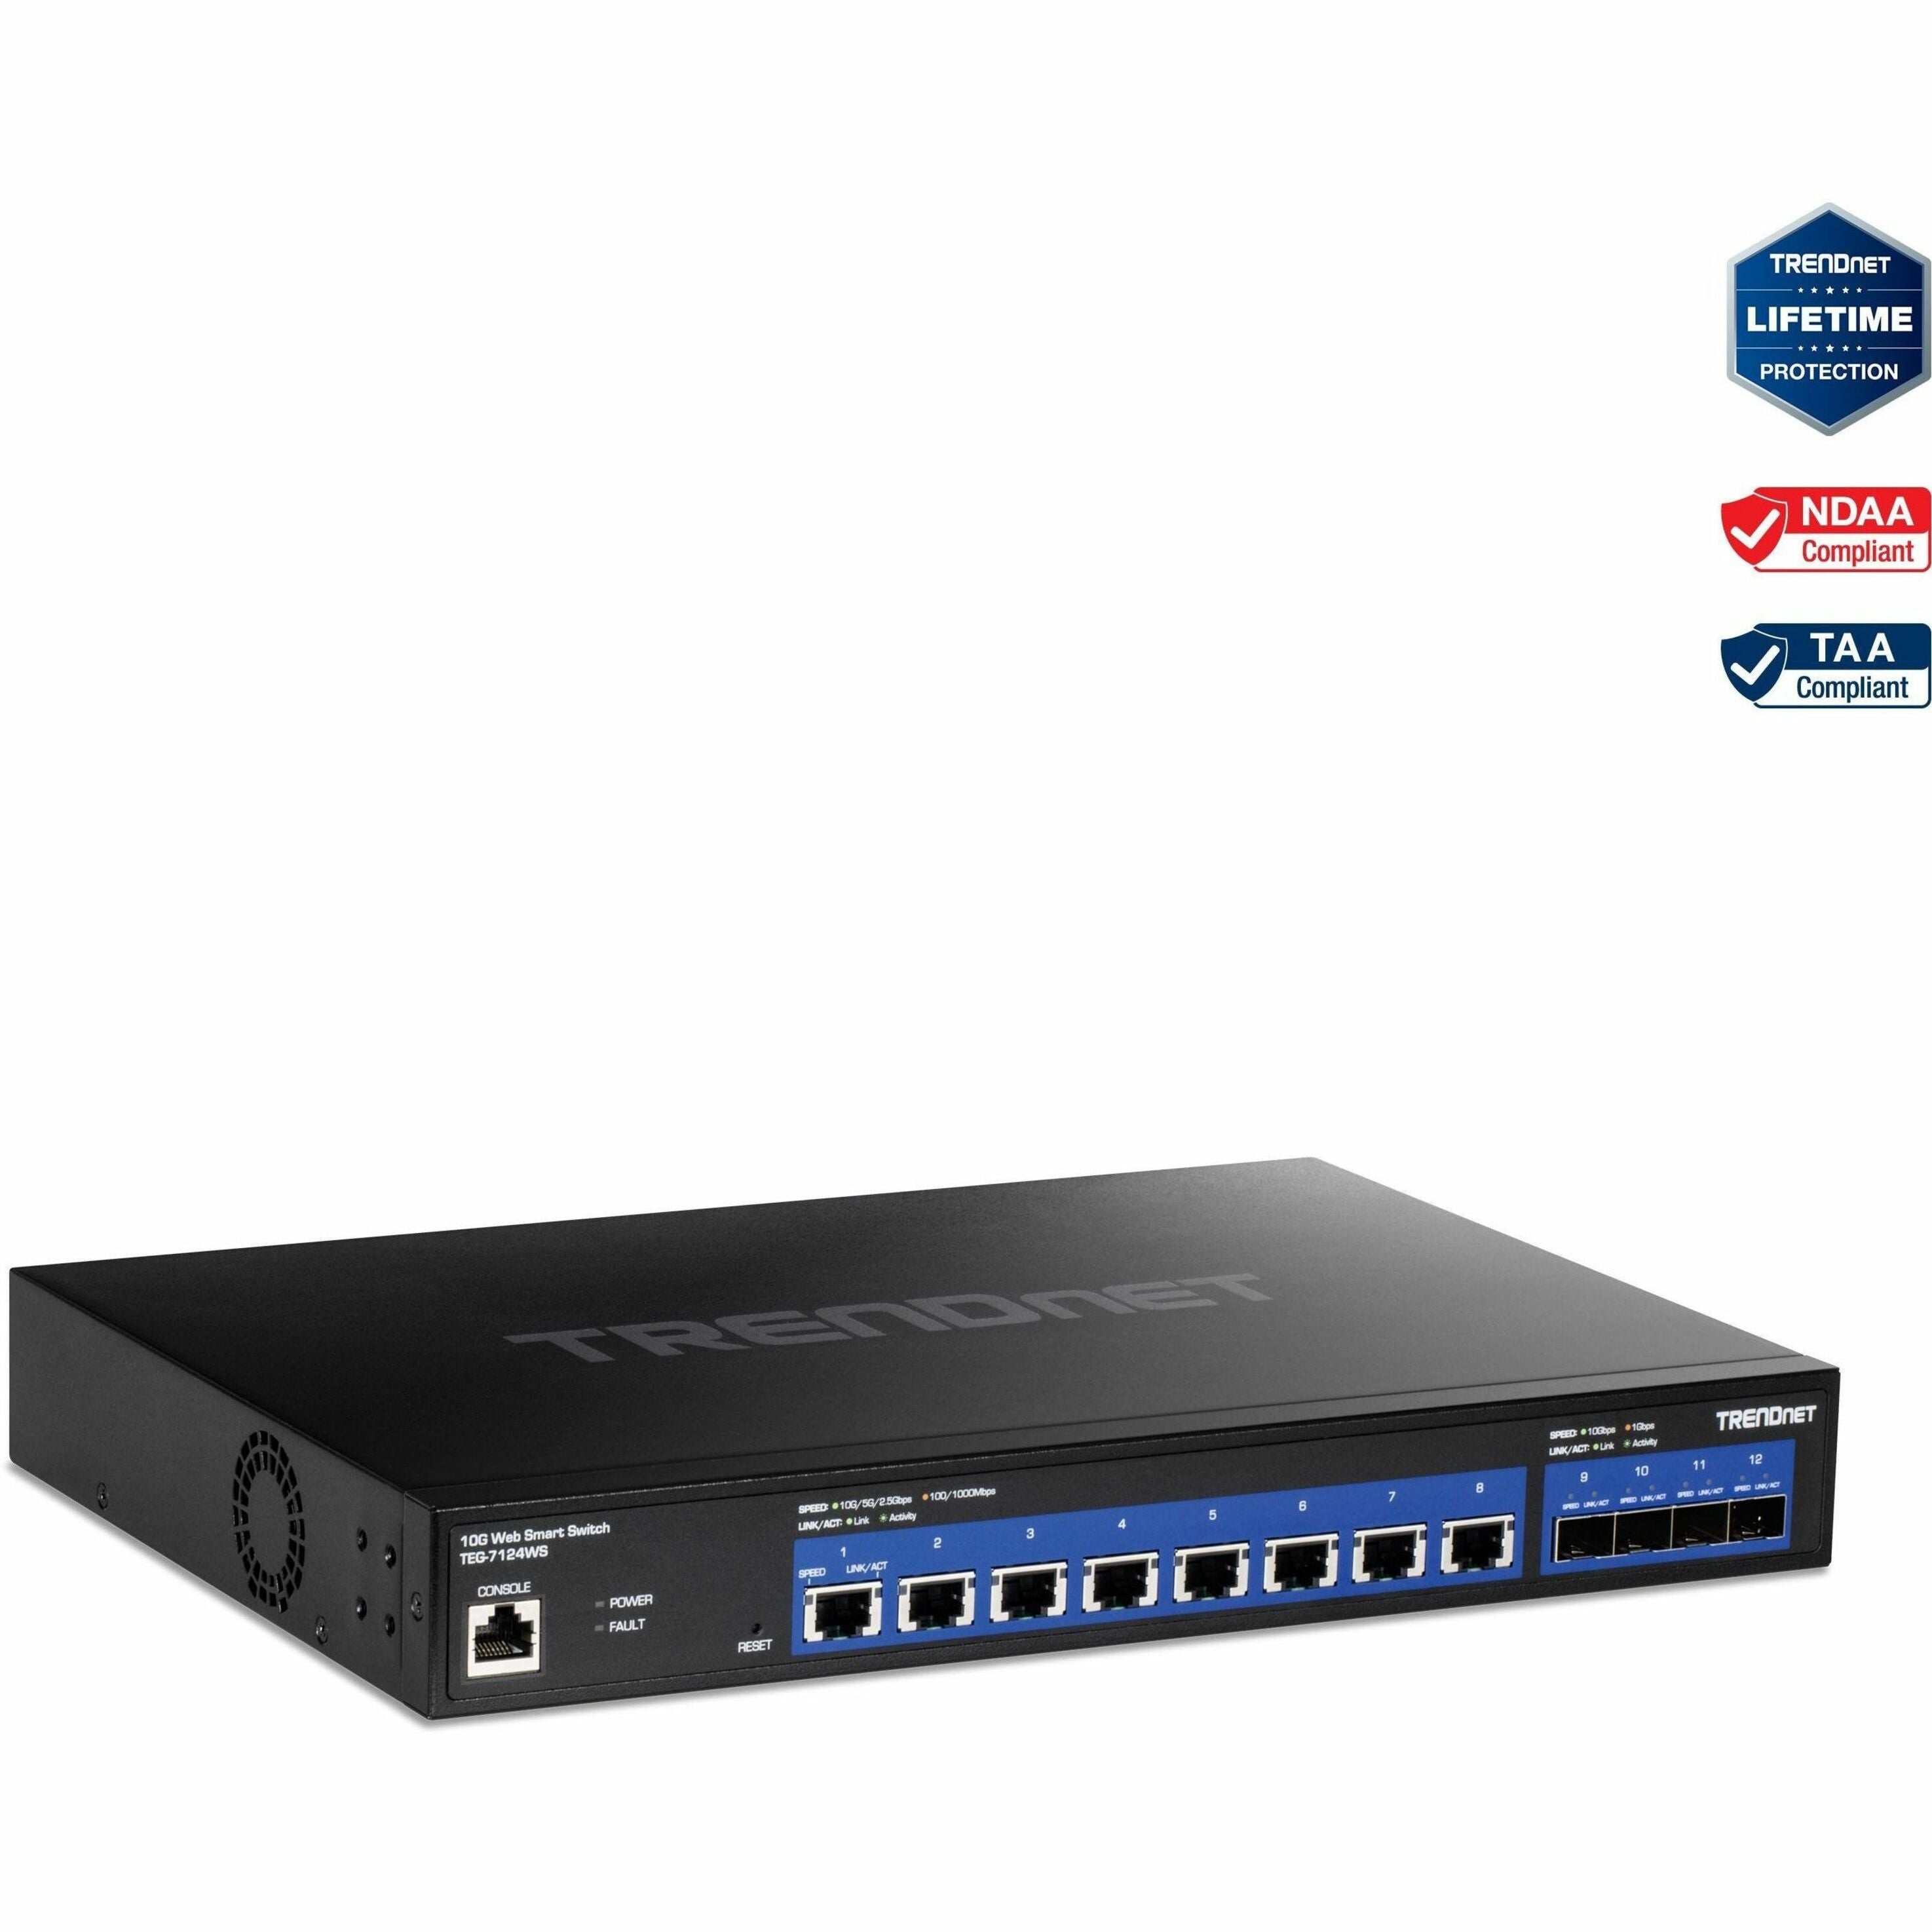 TRENDnet TEG-7124WS 12-Port 10G Web Smart Switch, 8 x 10G RJ-45 Ports, 4 x SFP+ Slots, VLAN, QoS, LACP, and IPv6 Support